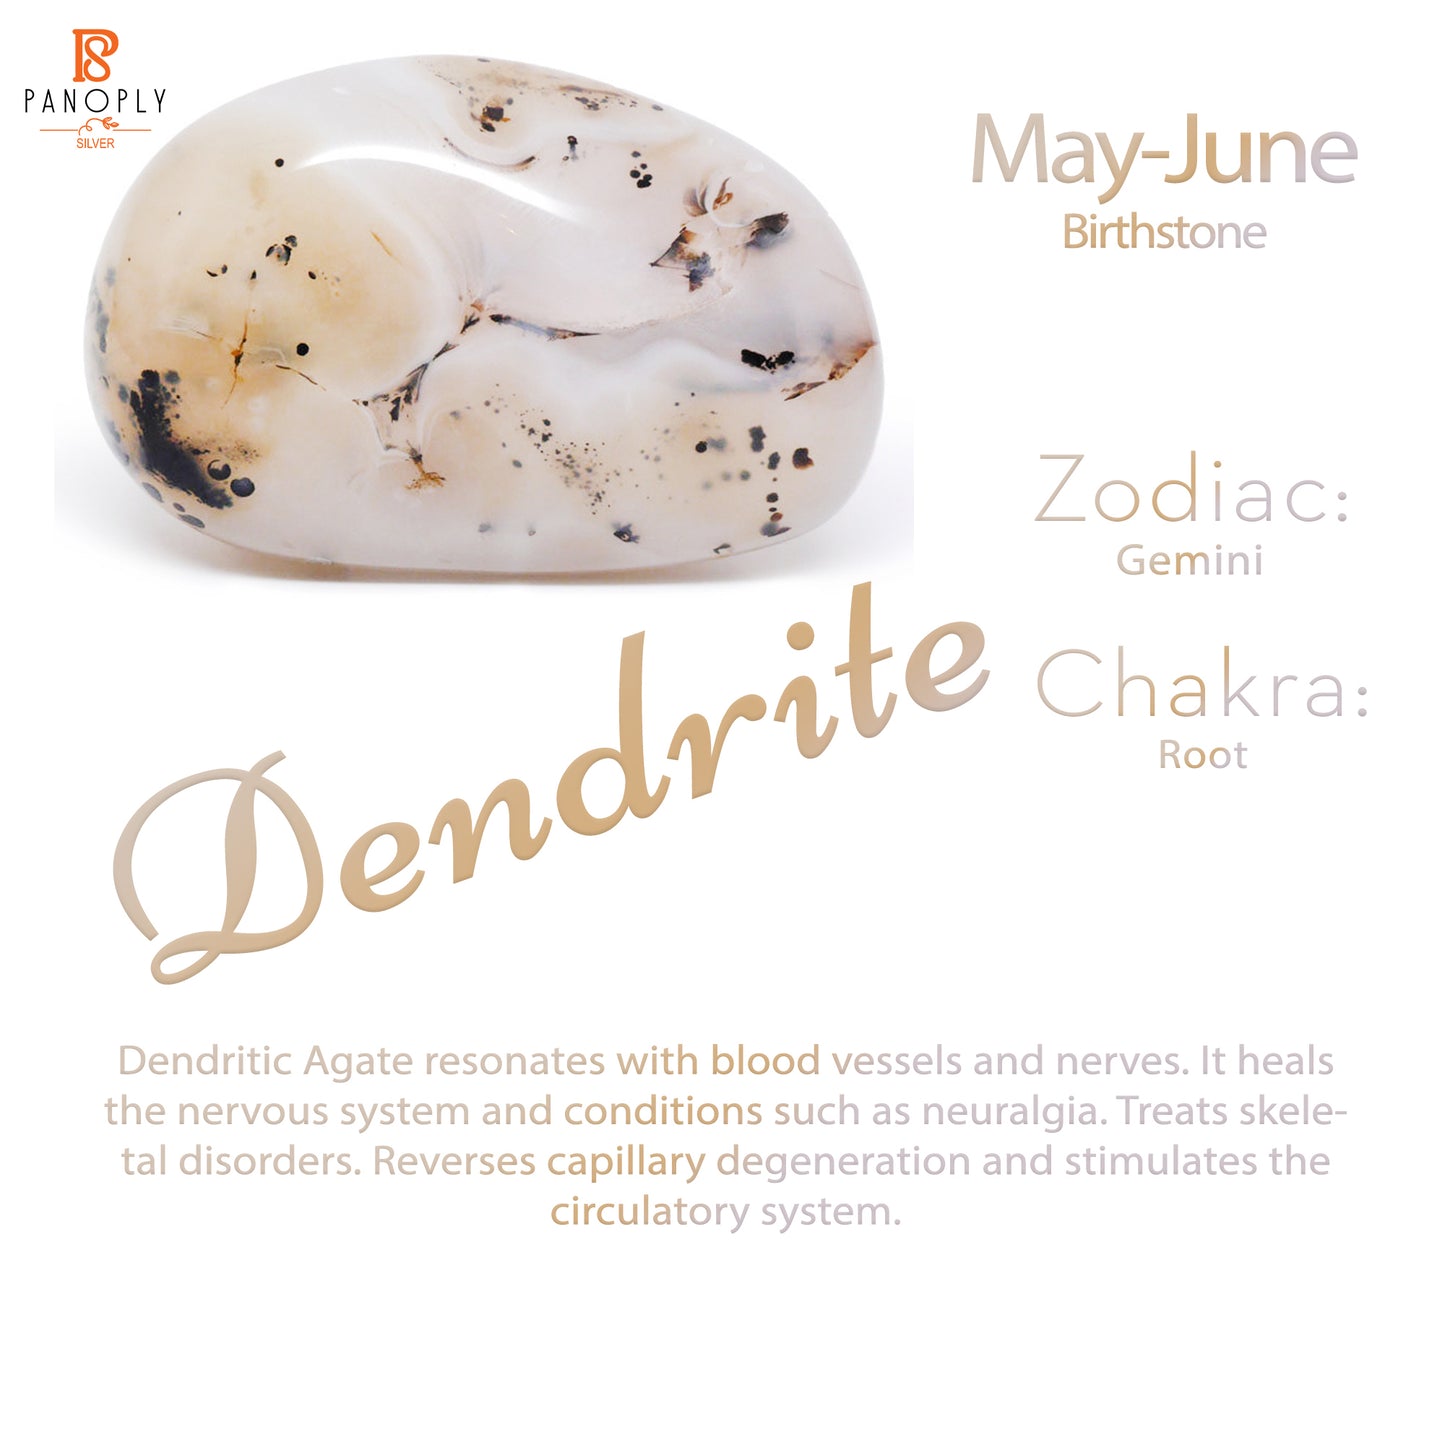 Dendrite Cloud Earrings - Crystal Quartz With Drops Design Earrings